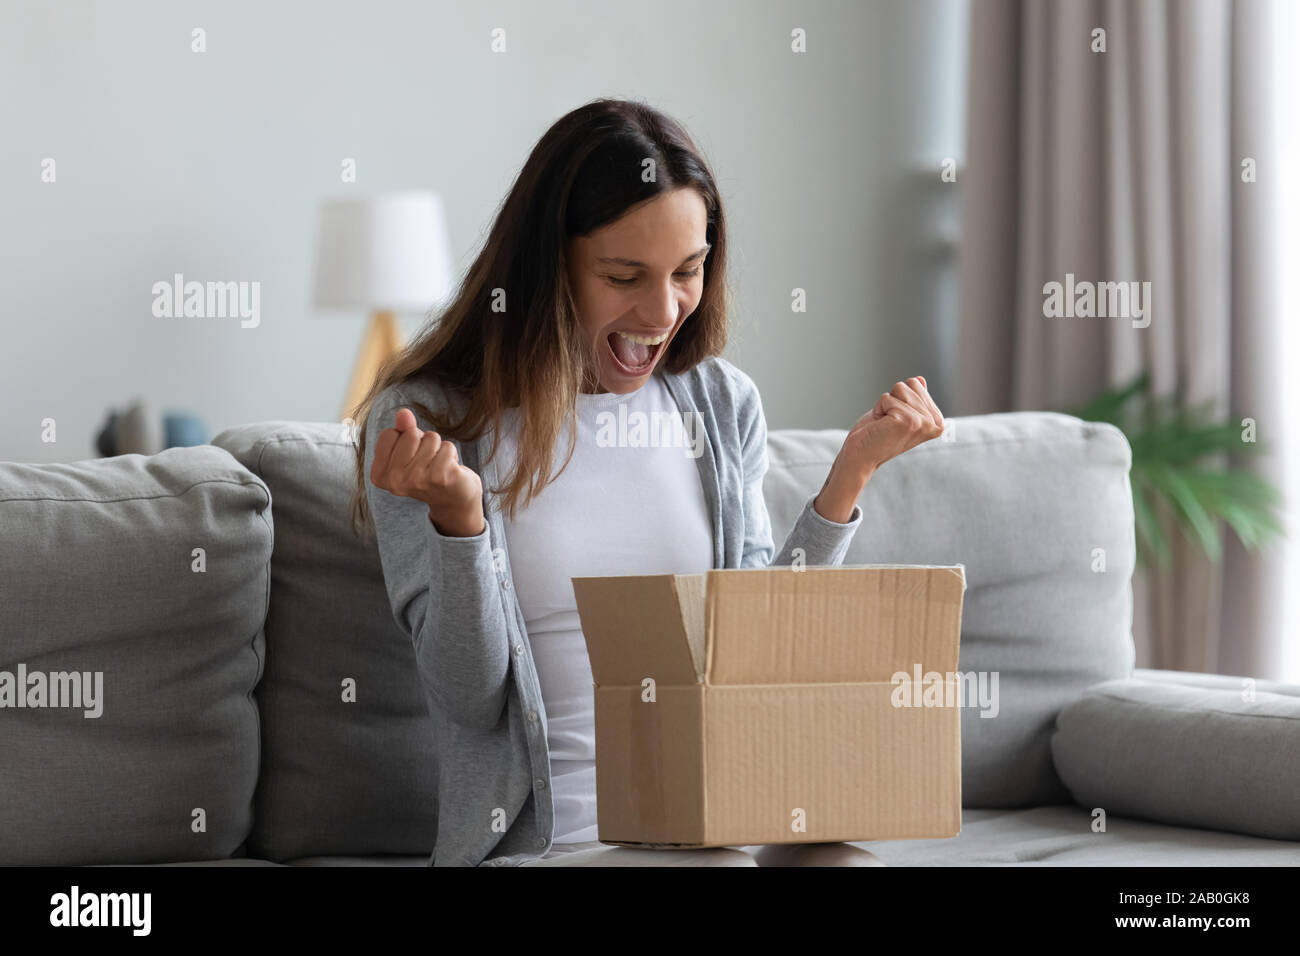 Woman screaming with joy opens carton parcel box feels happy Stock Photo